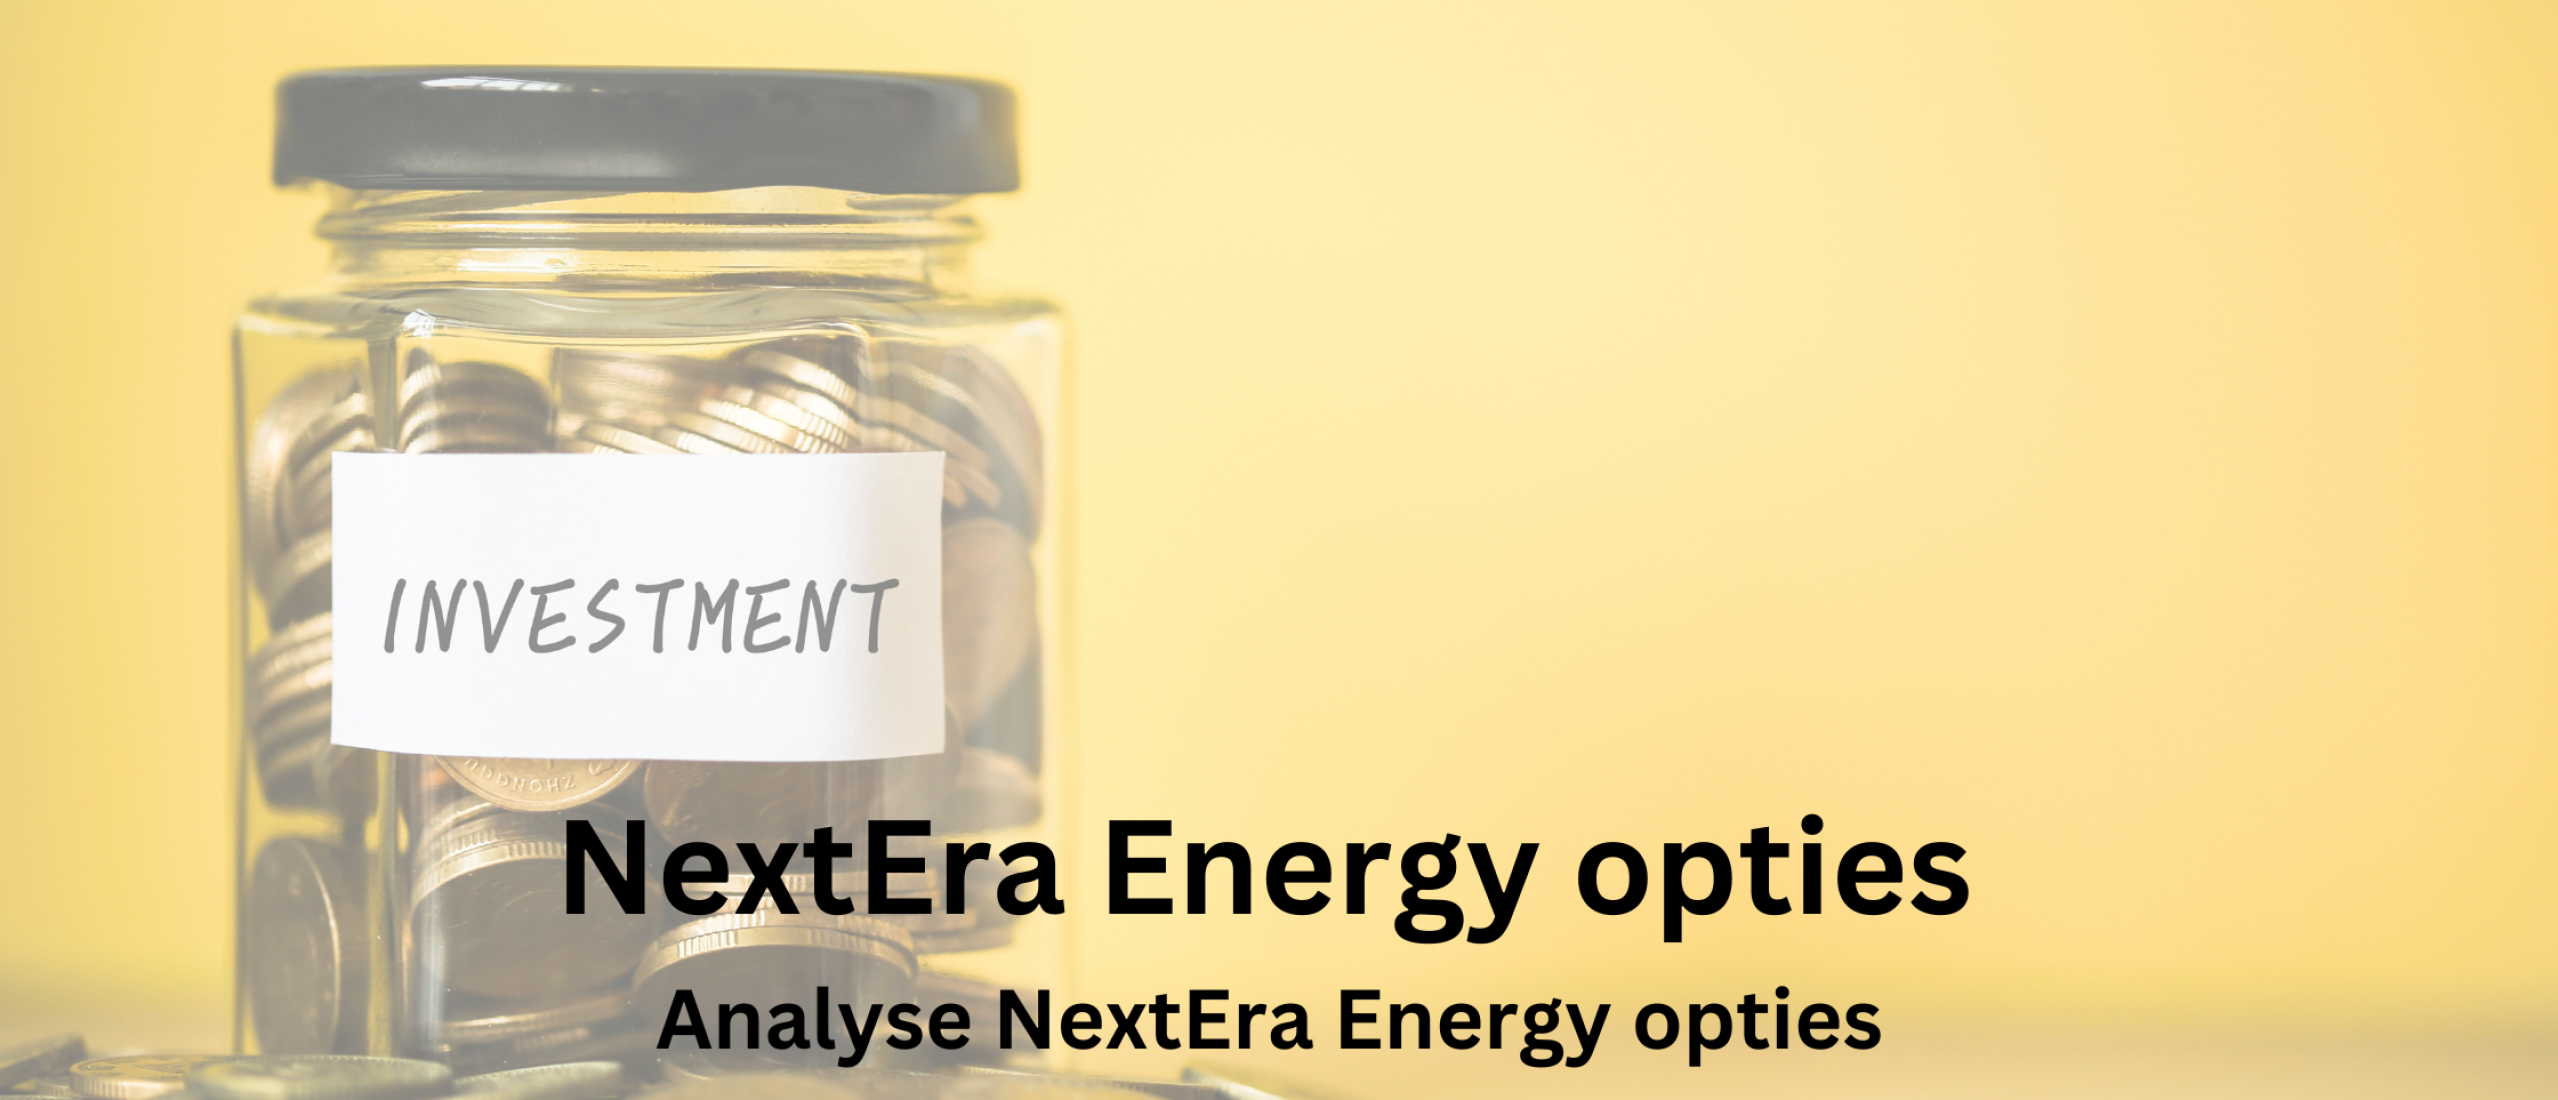 nextera-energy-opties-